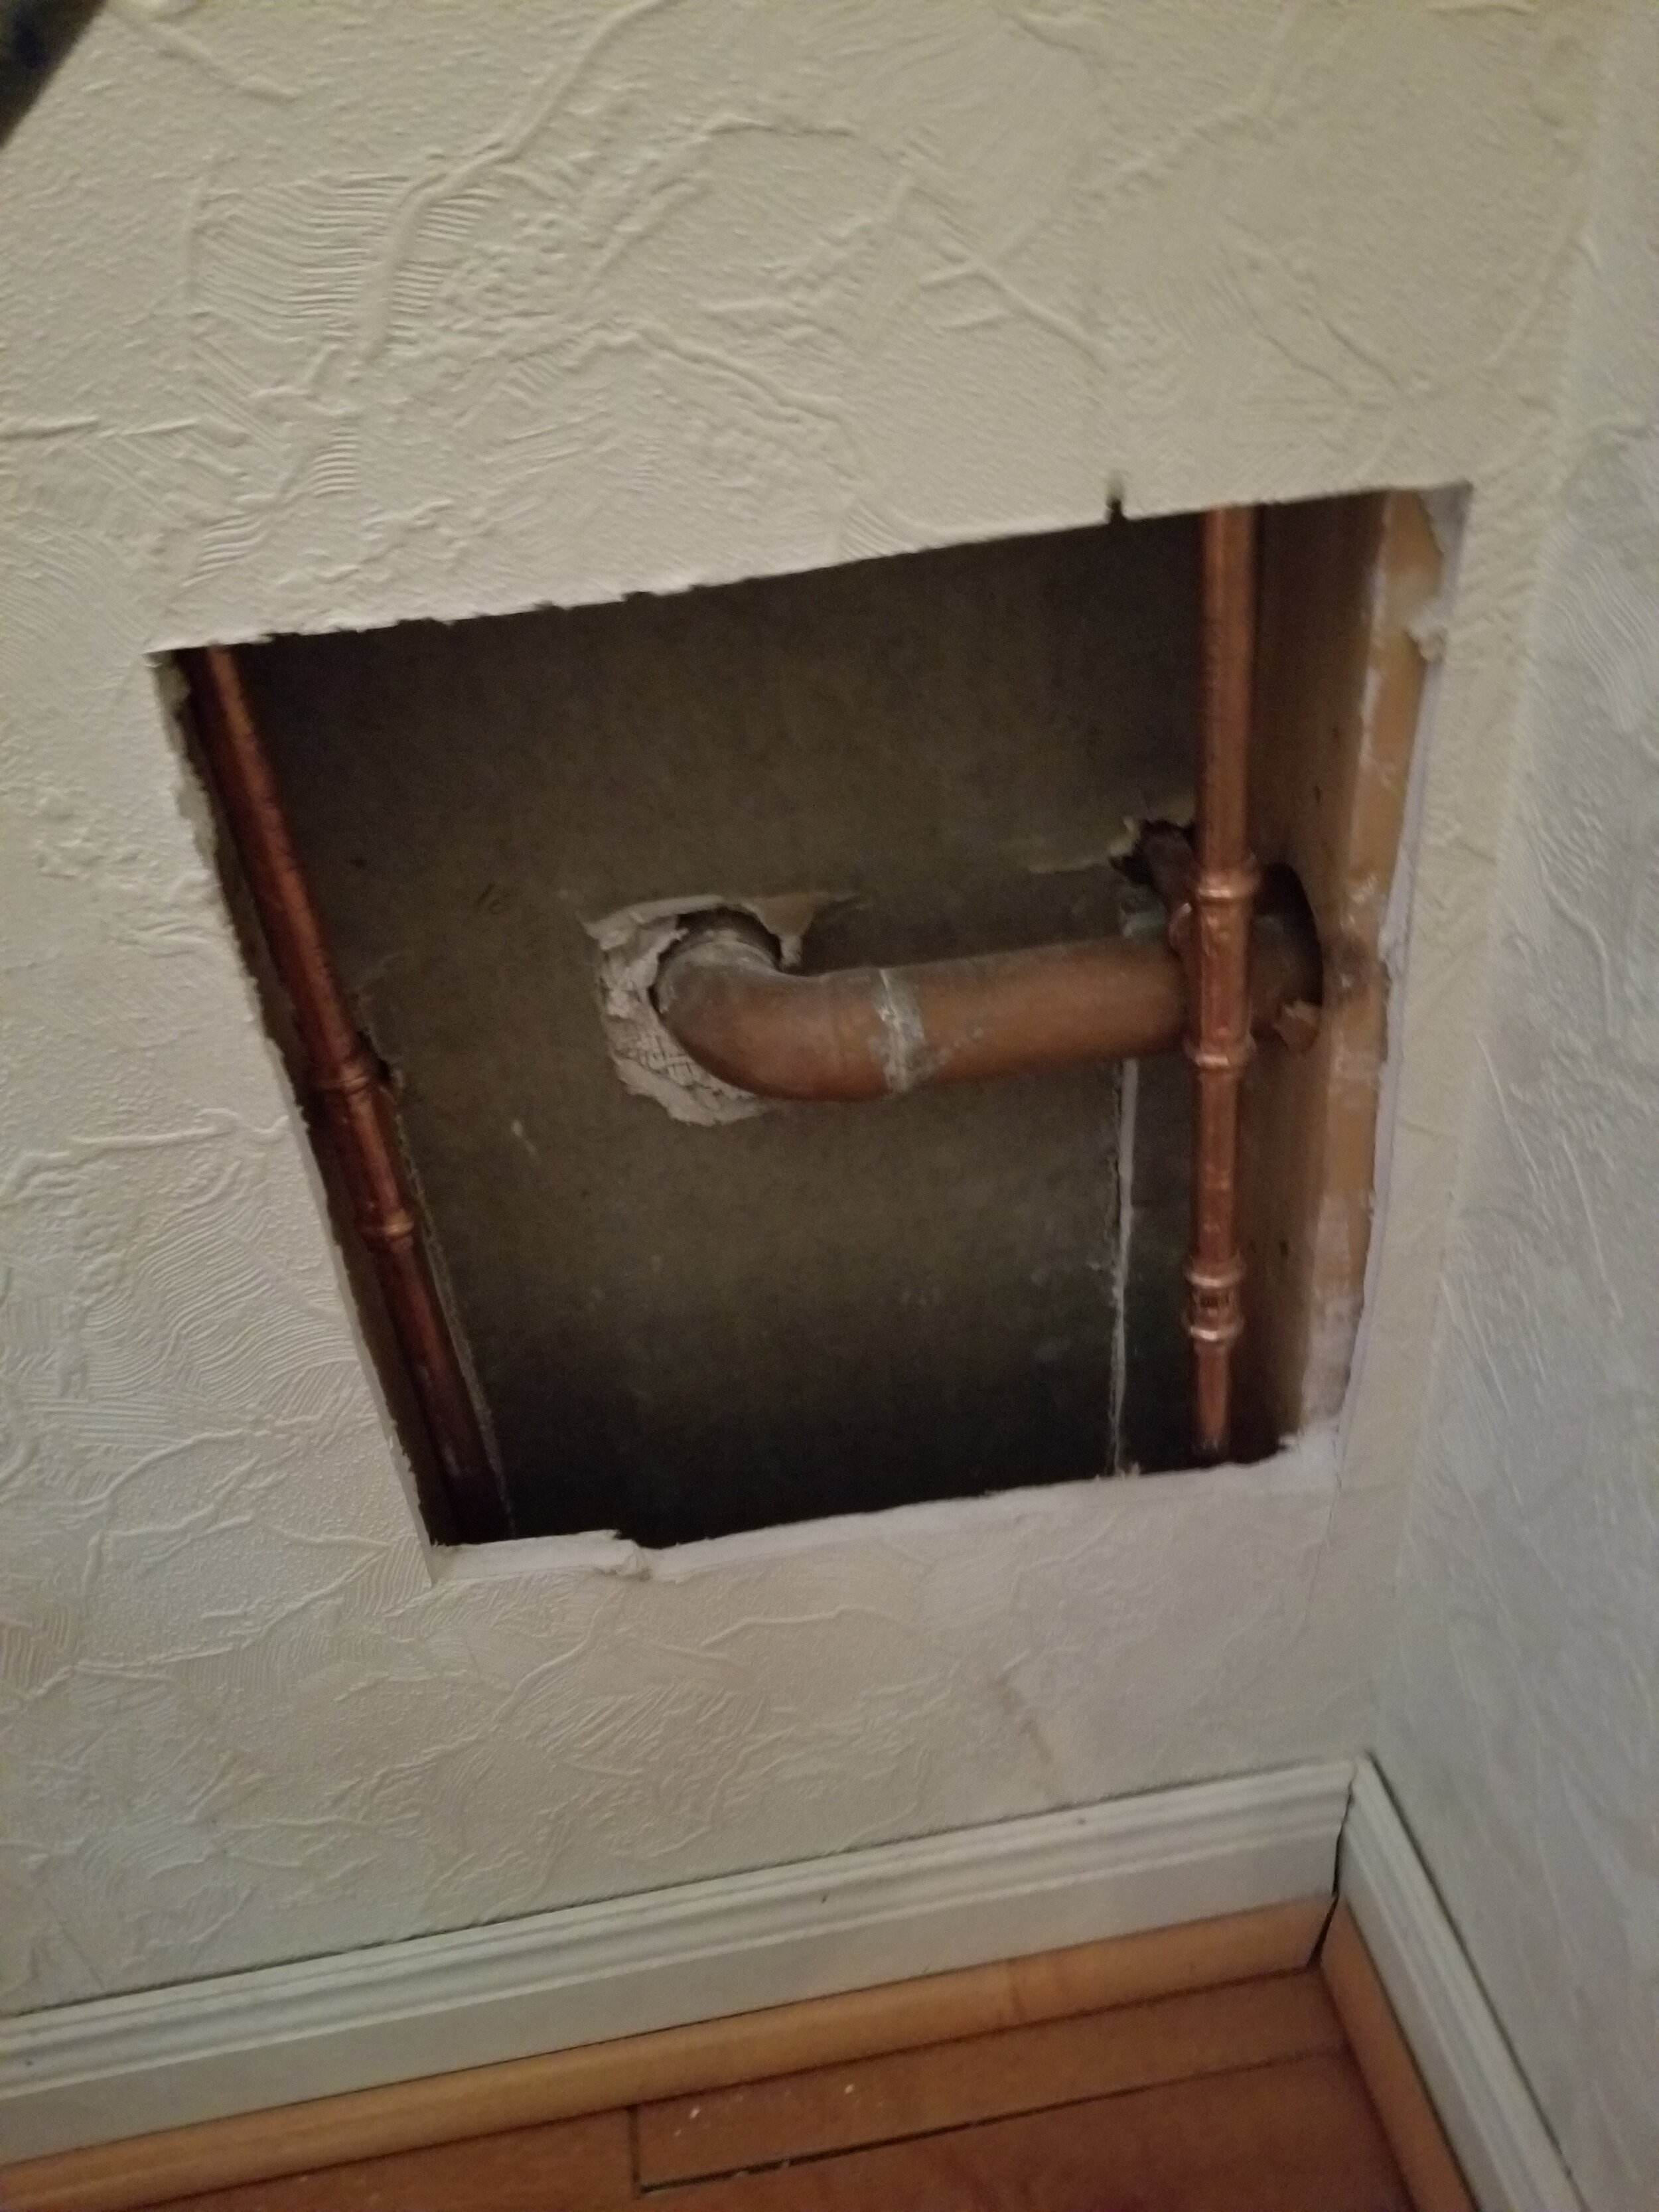 hole in wall repair.jpg